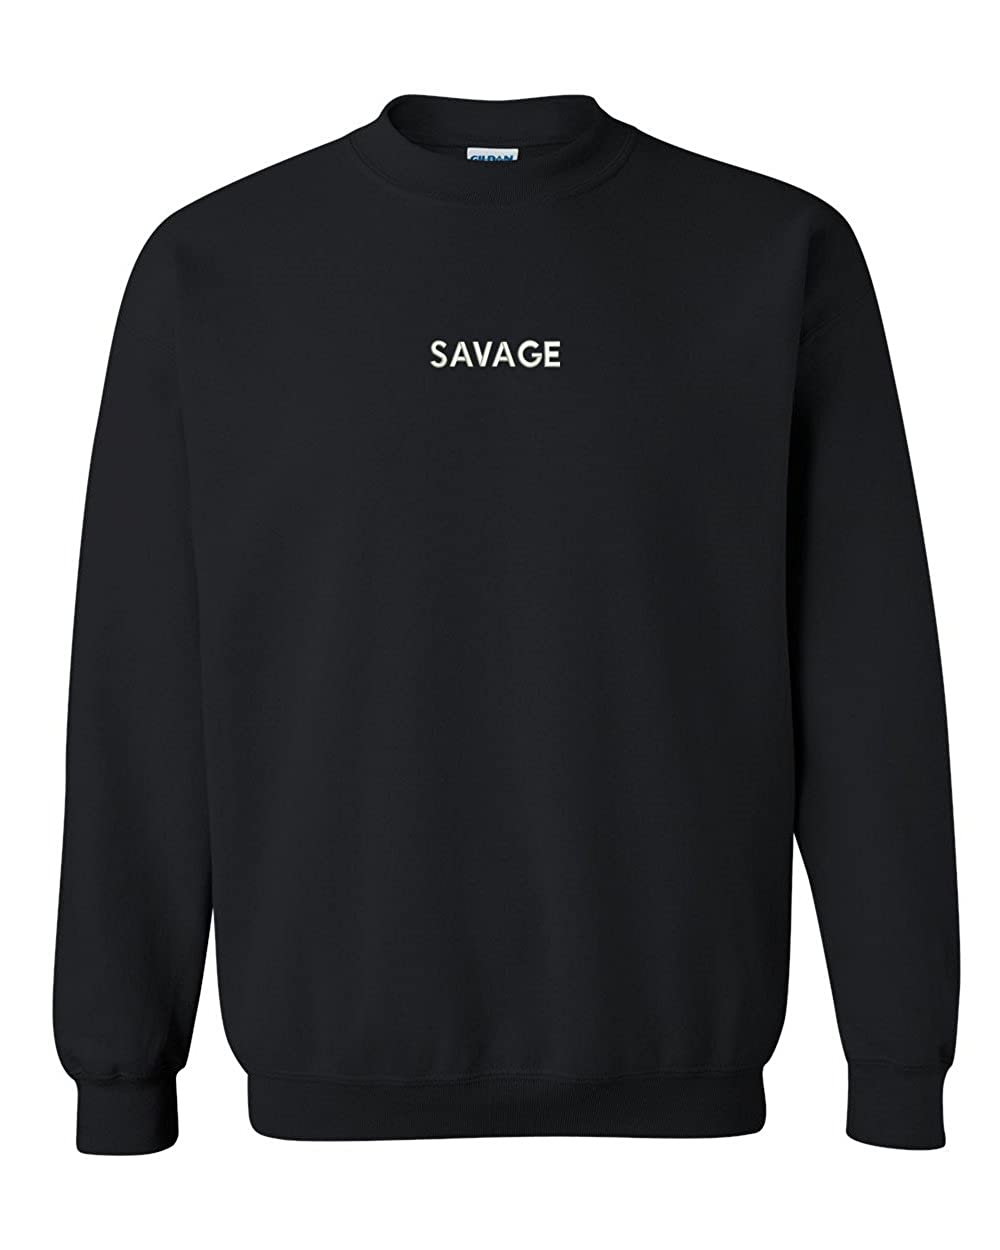 Trendy Apparel Shop Savage Embroidered Crewneck Sweatshirt